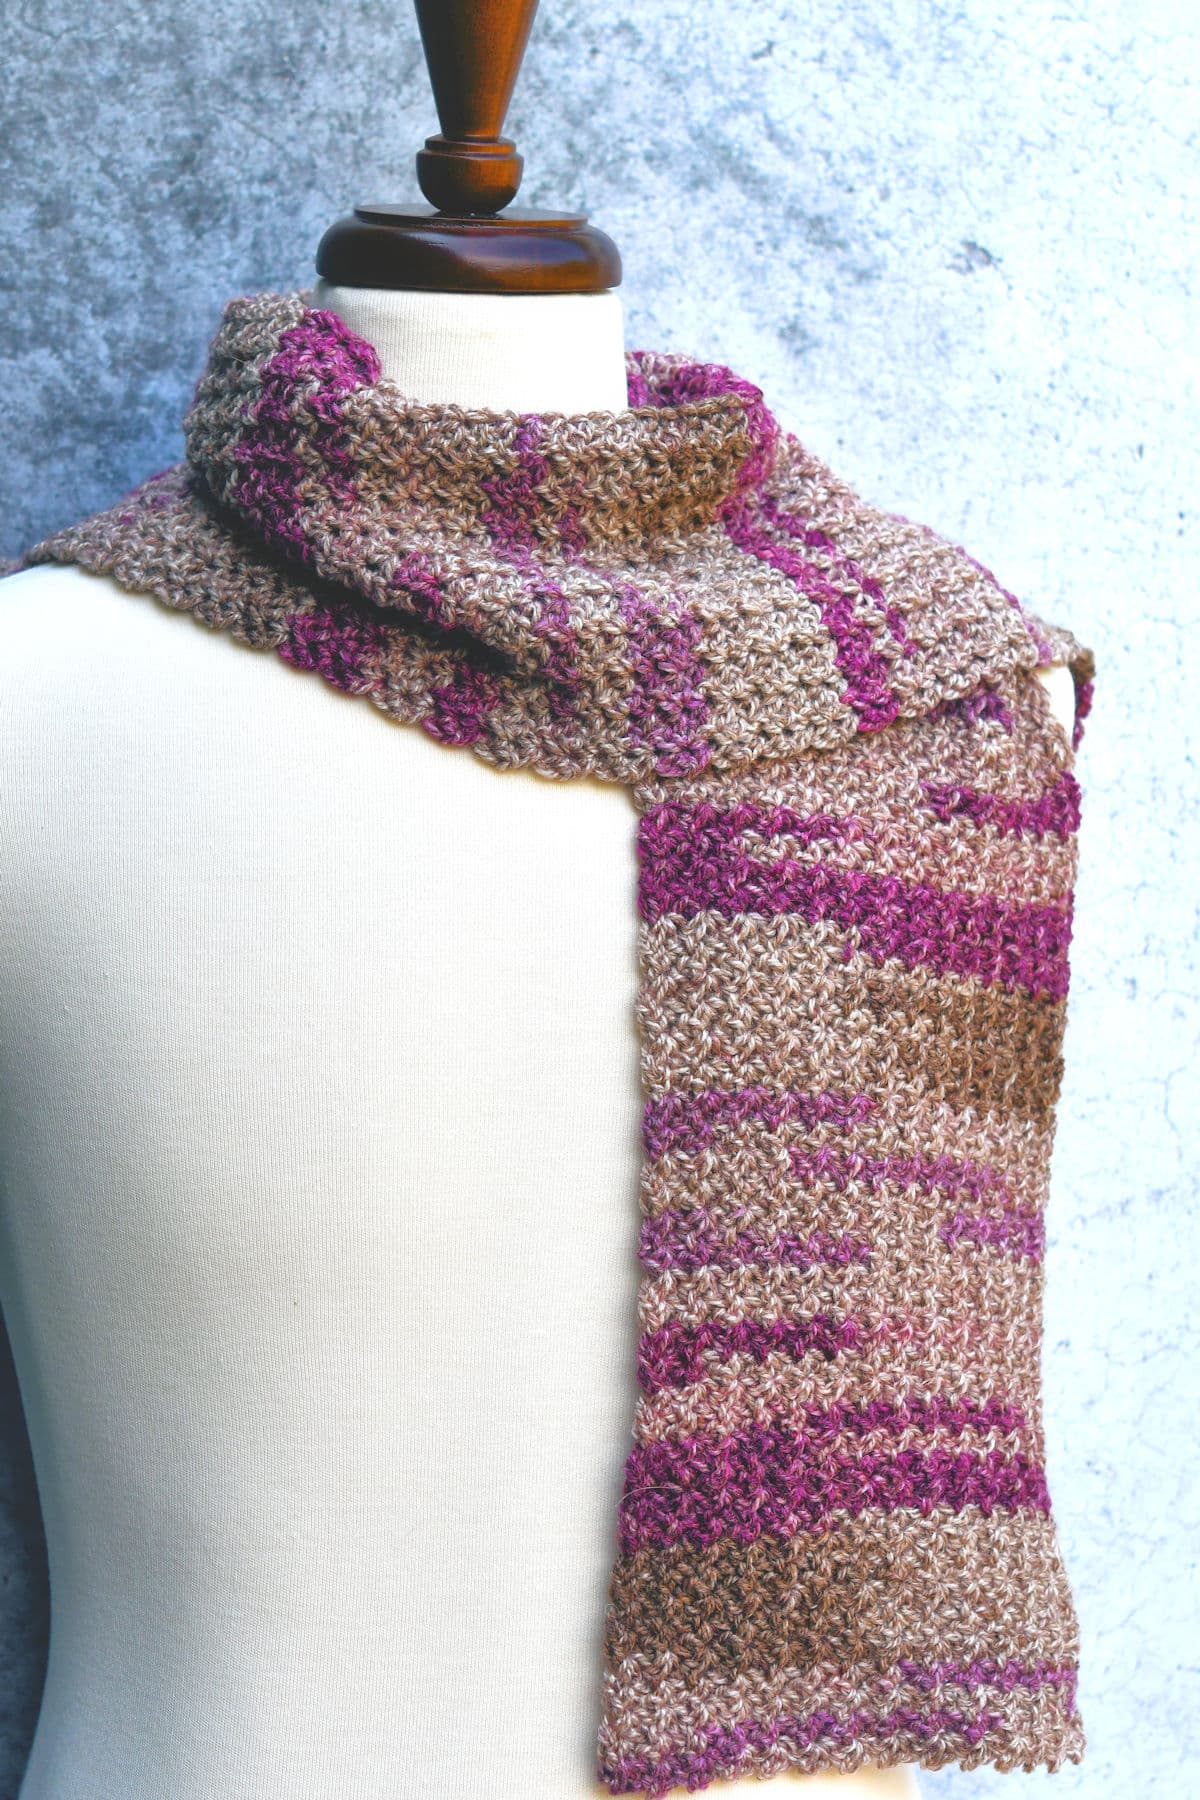 Beginner Crochet Scarf | Double Moss Stitch Knit Look